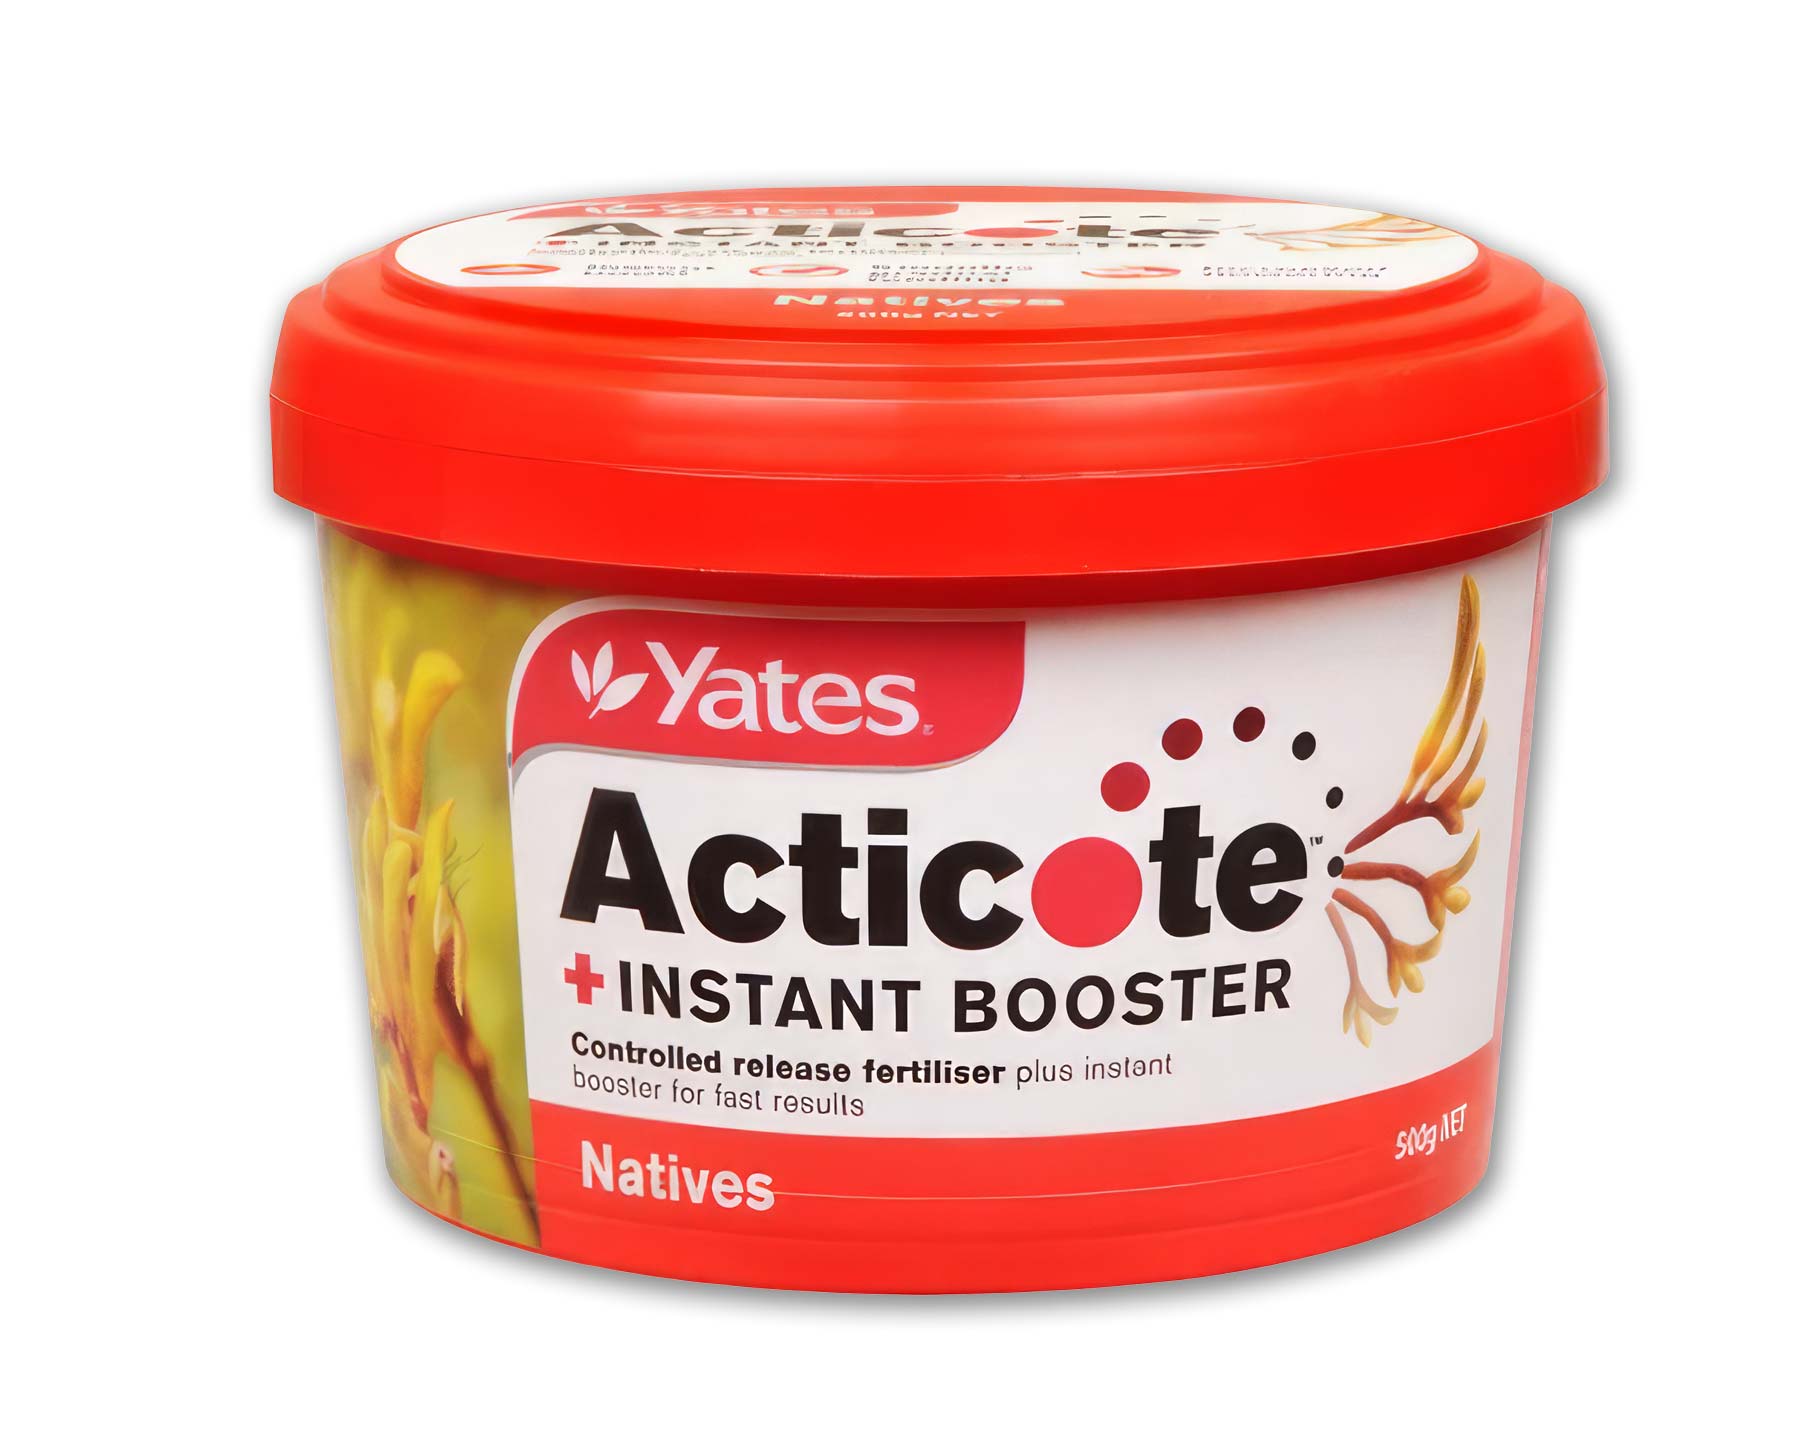 Acticote fertiliser for Natives by Yates